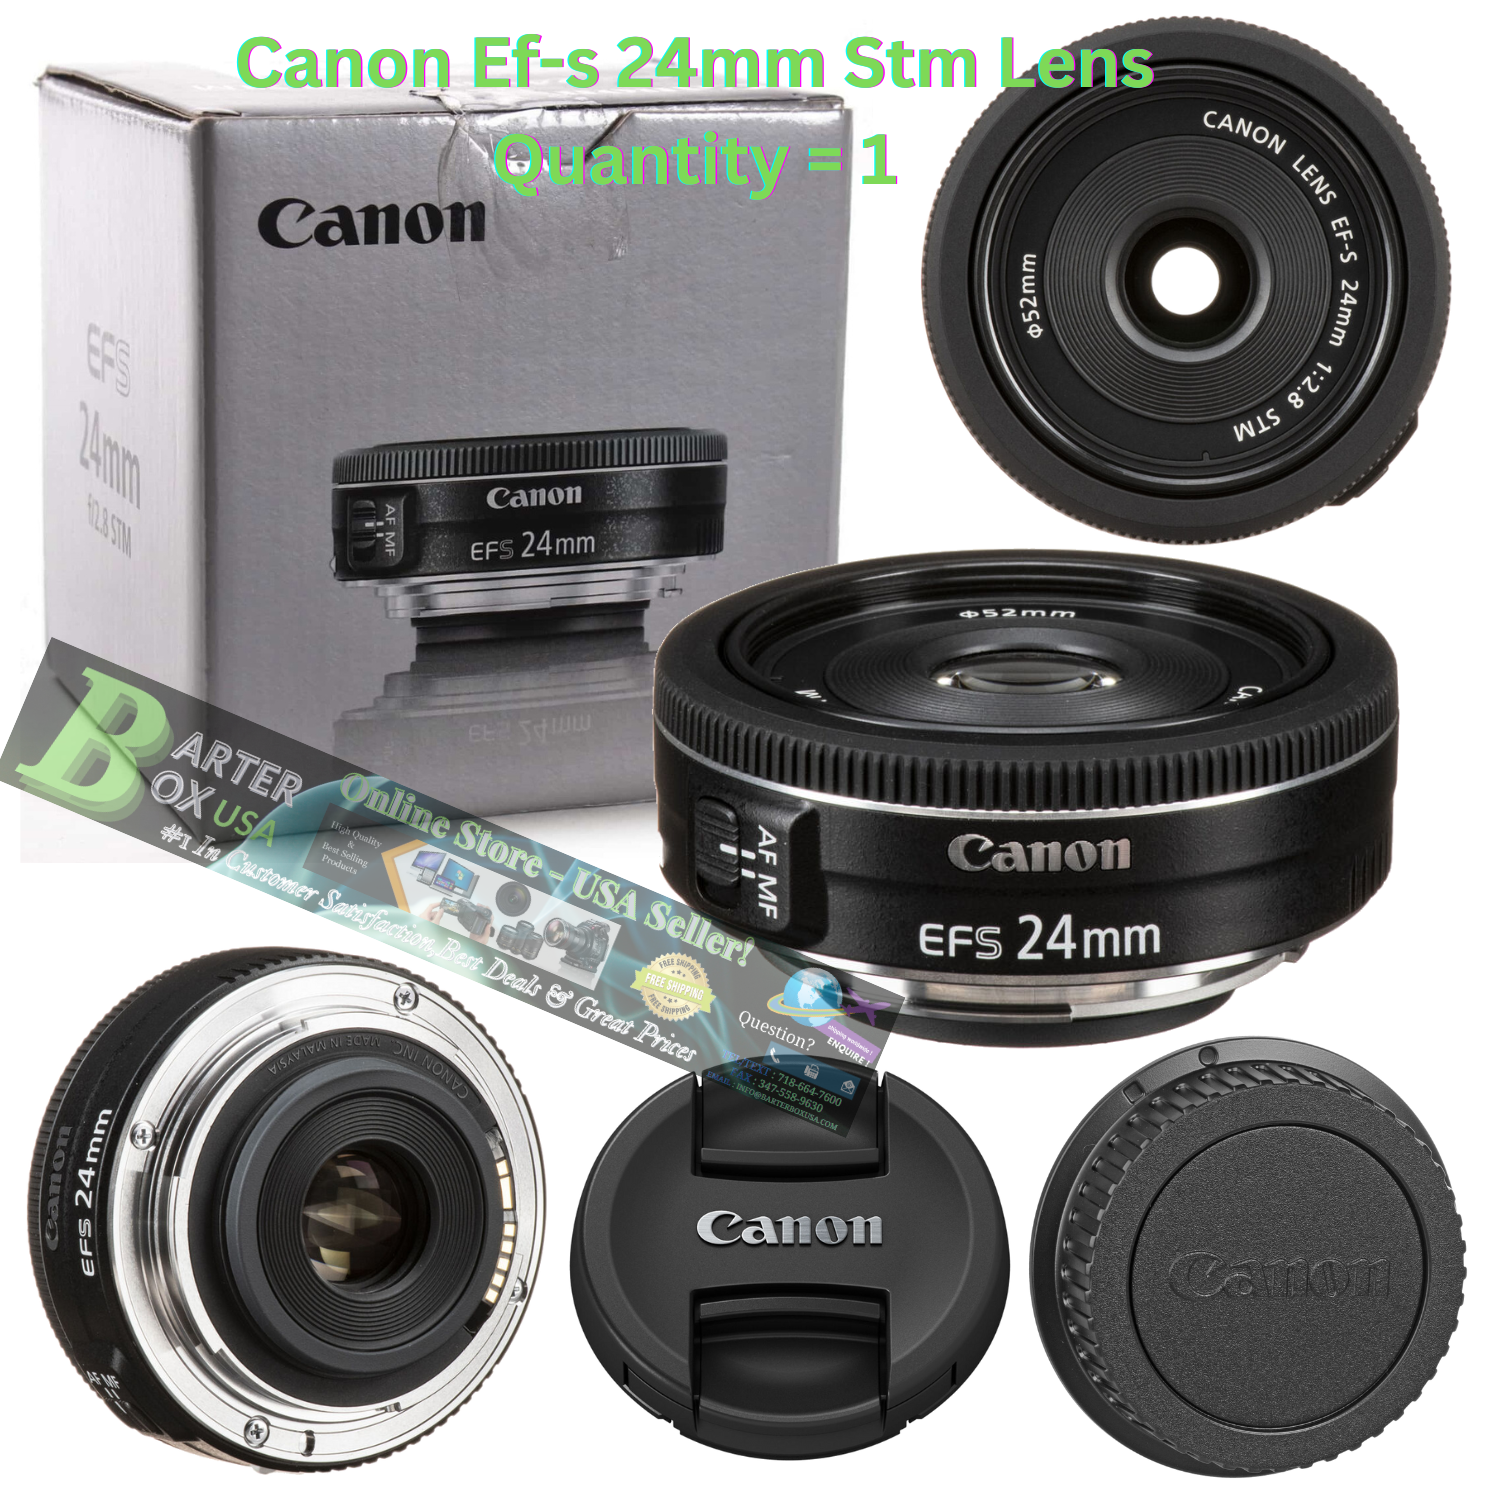 Canon Cameras lens 24mm Standards Prime Auto Focus Stm Ef-s F/2.8 Macro Wide Canon 9522B002